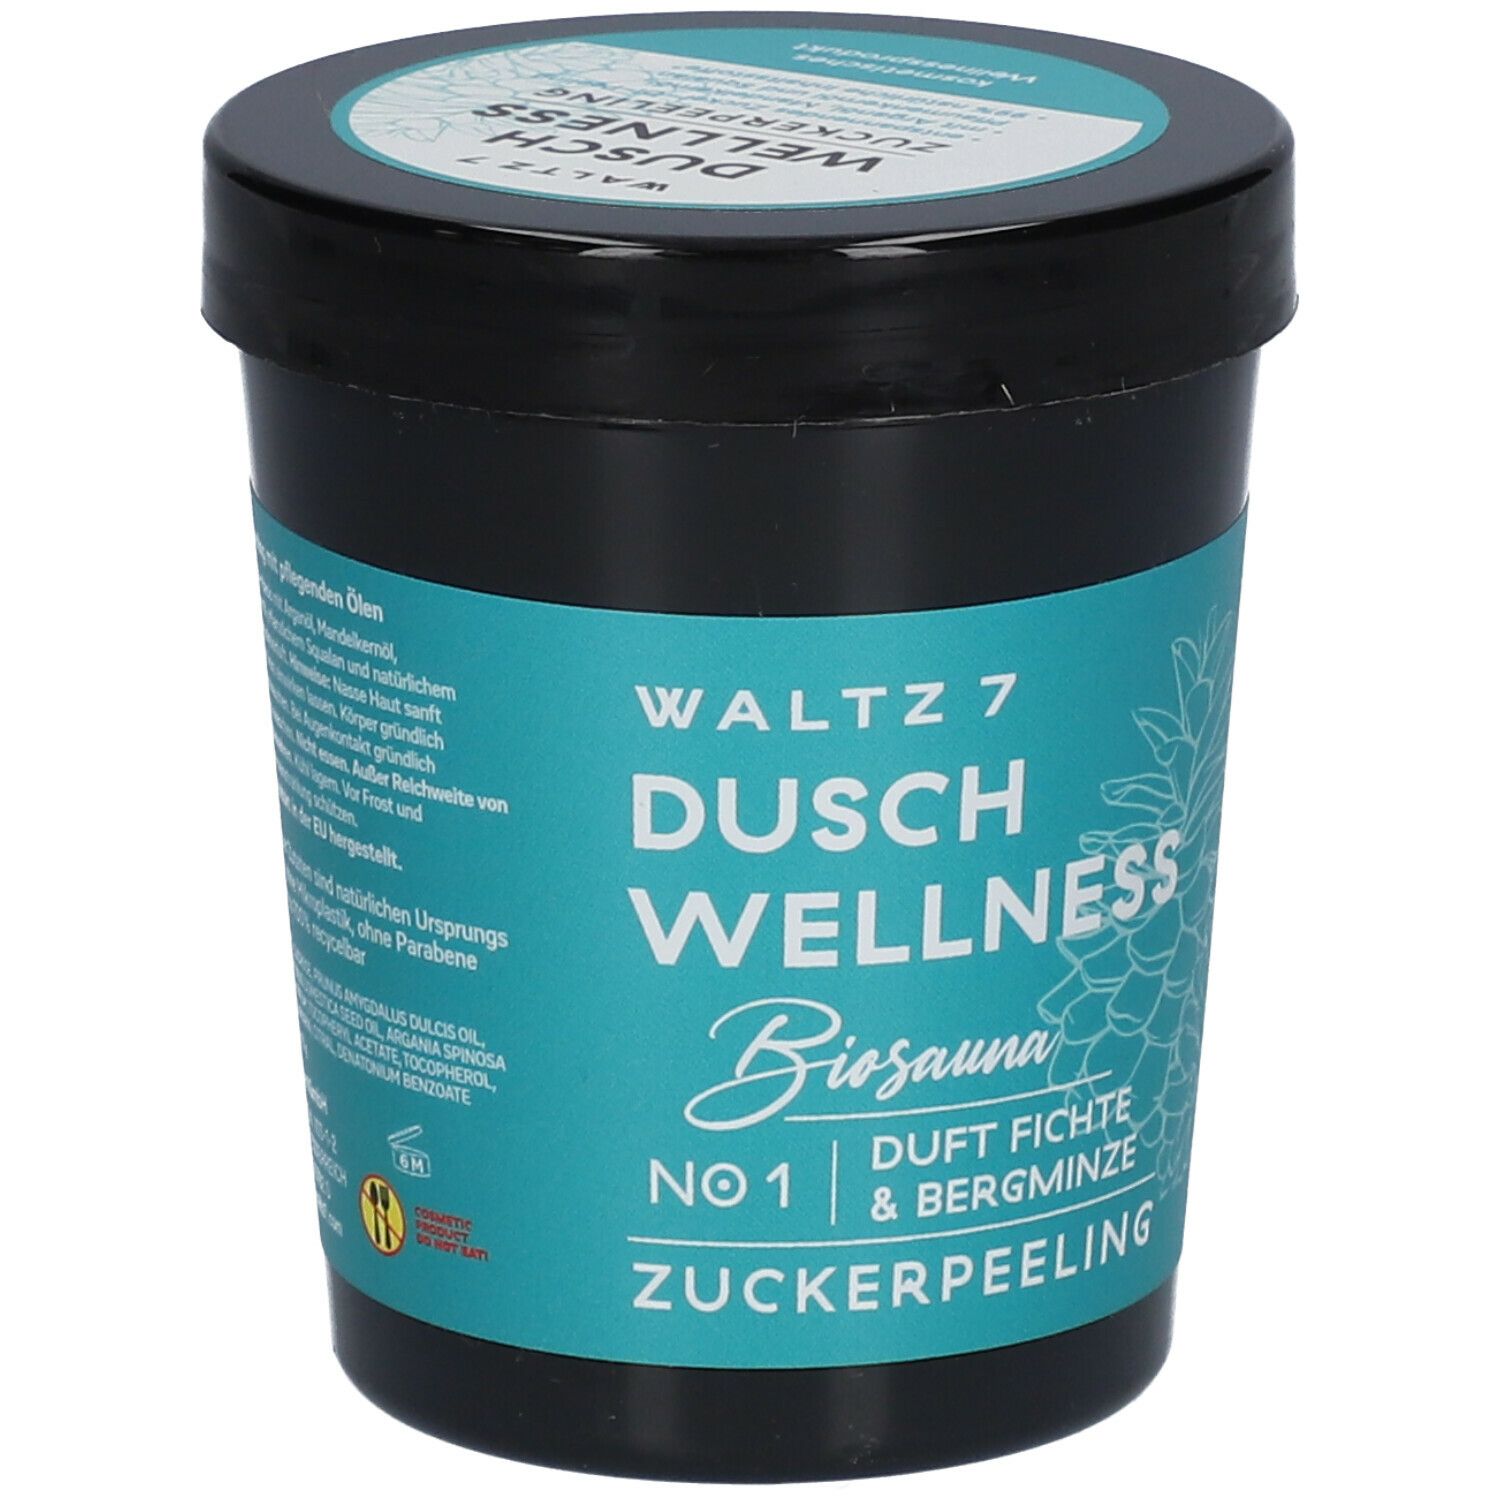 WALTZ 7 Wellness-Zucker-Öl-Peeling Biosauna Duft Fichte Bergminze